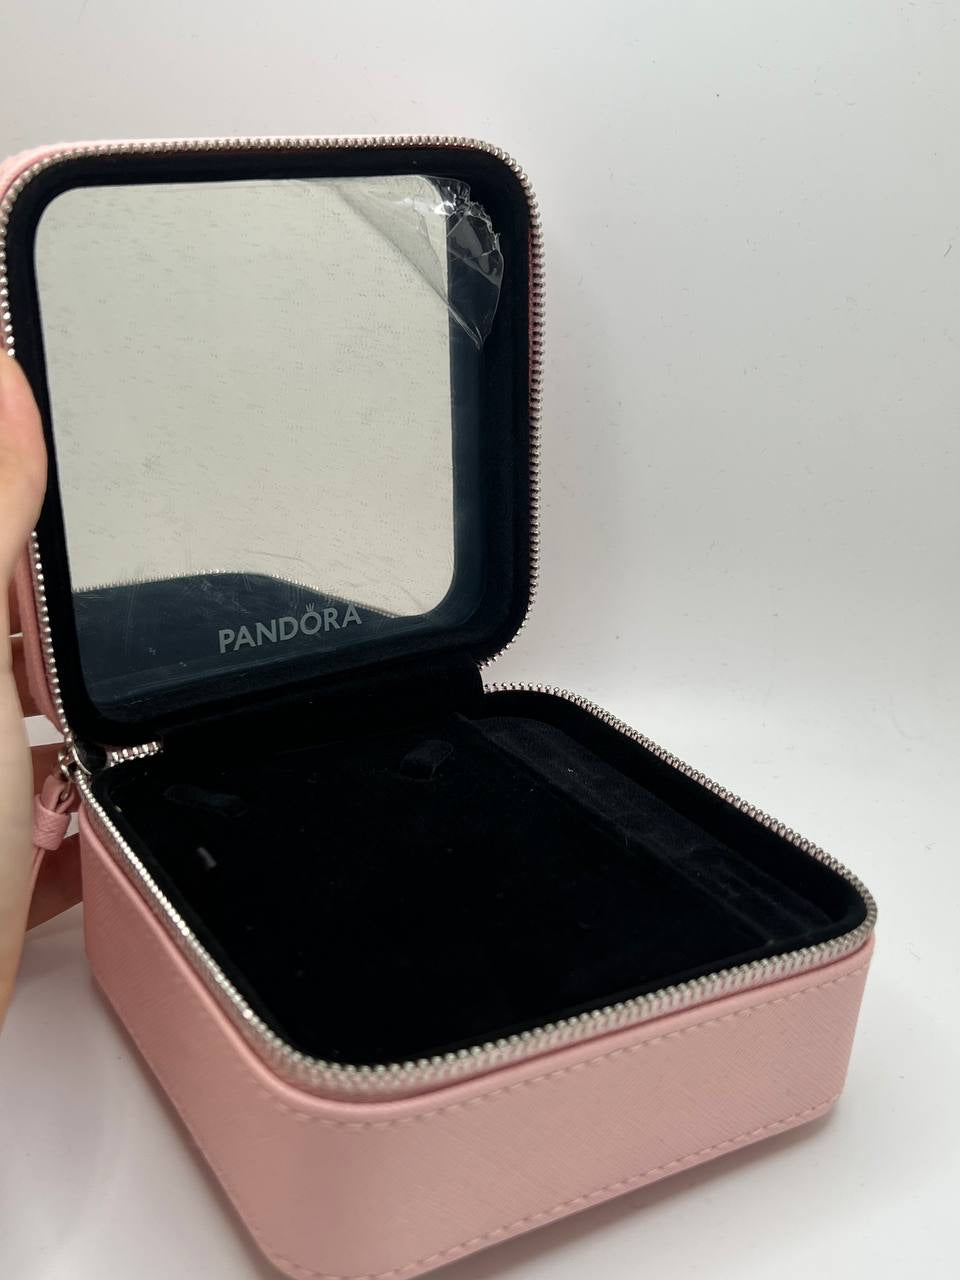 Pandora jewelry box